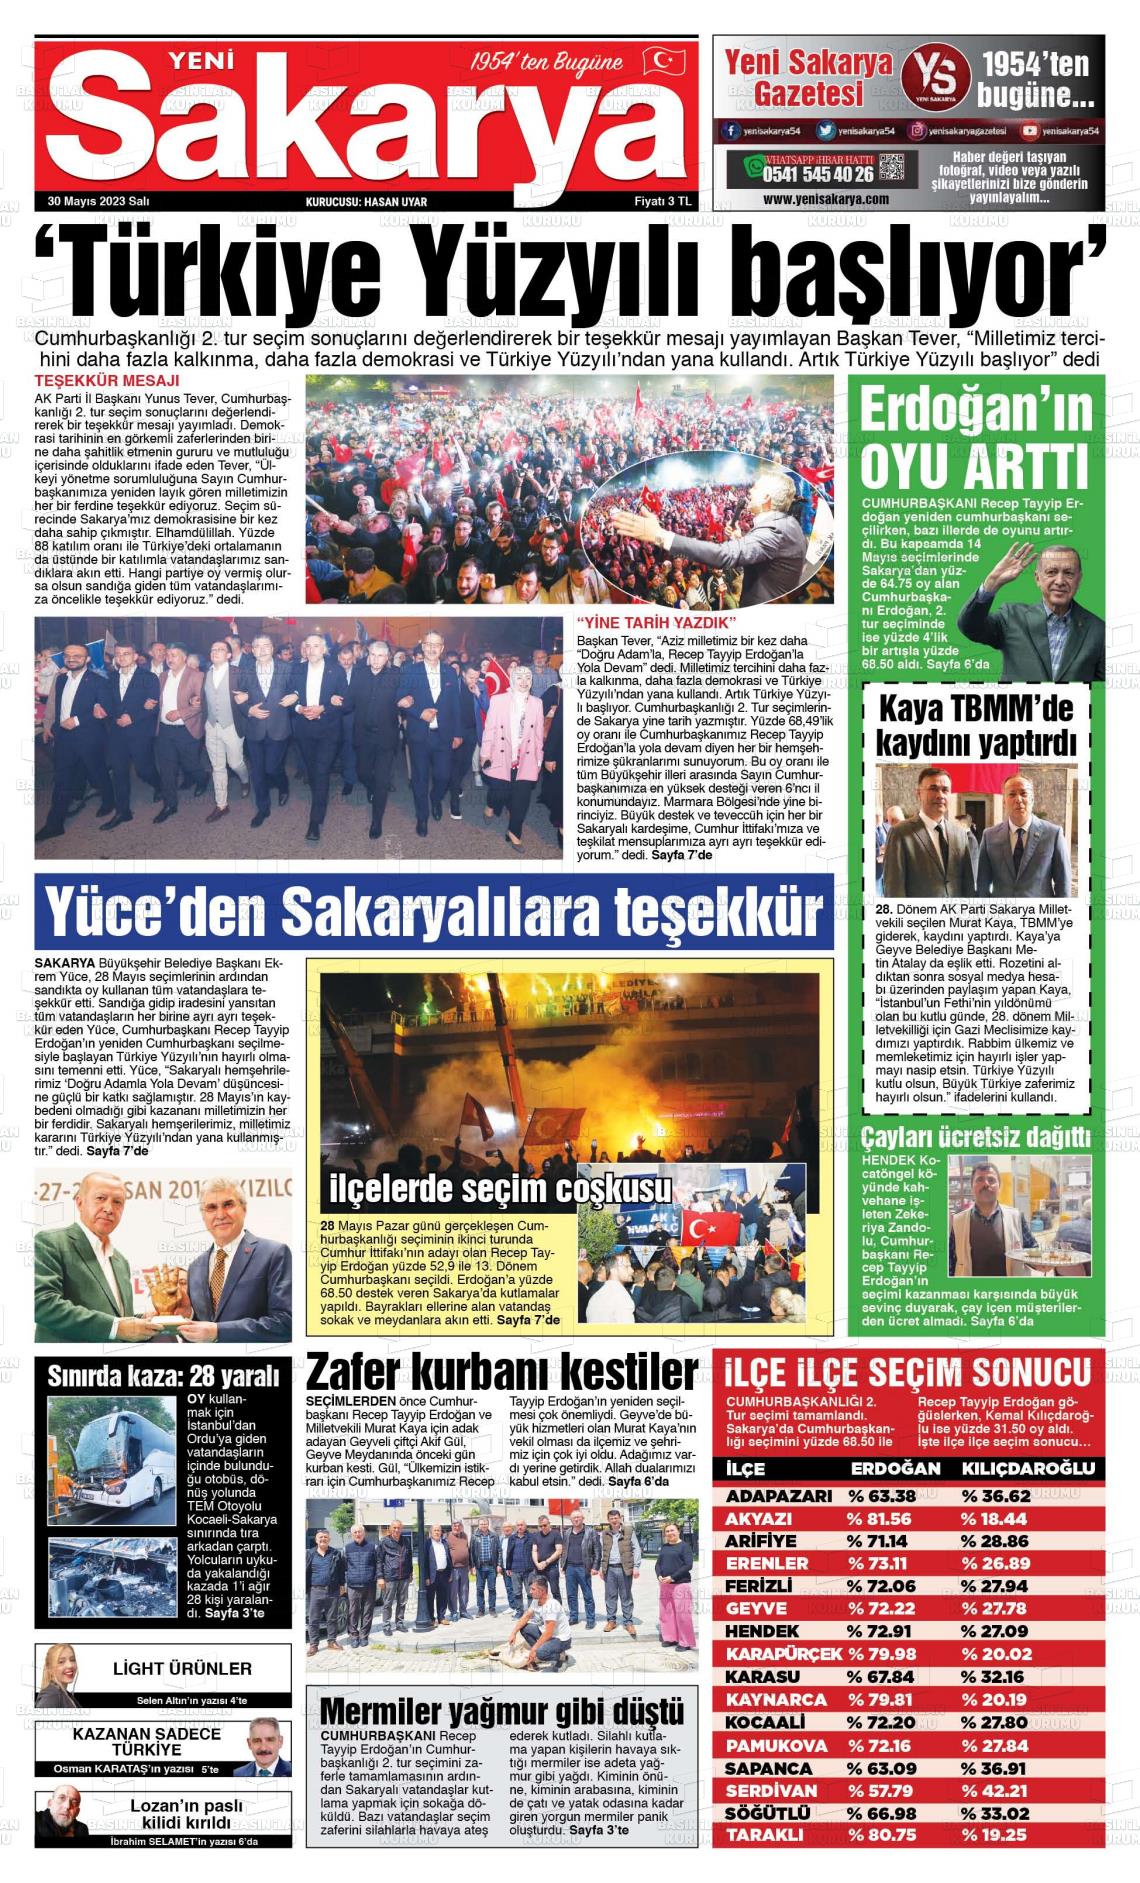 30 Mayıs 2023 Yeni Sakarya Gazete Manşeti